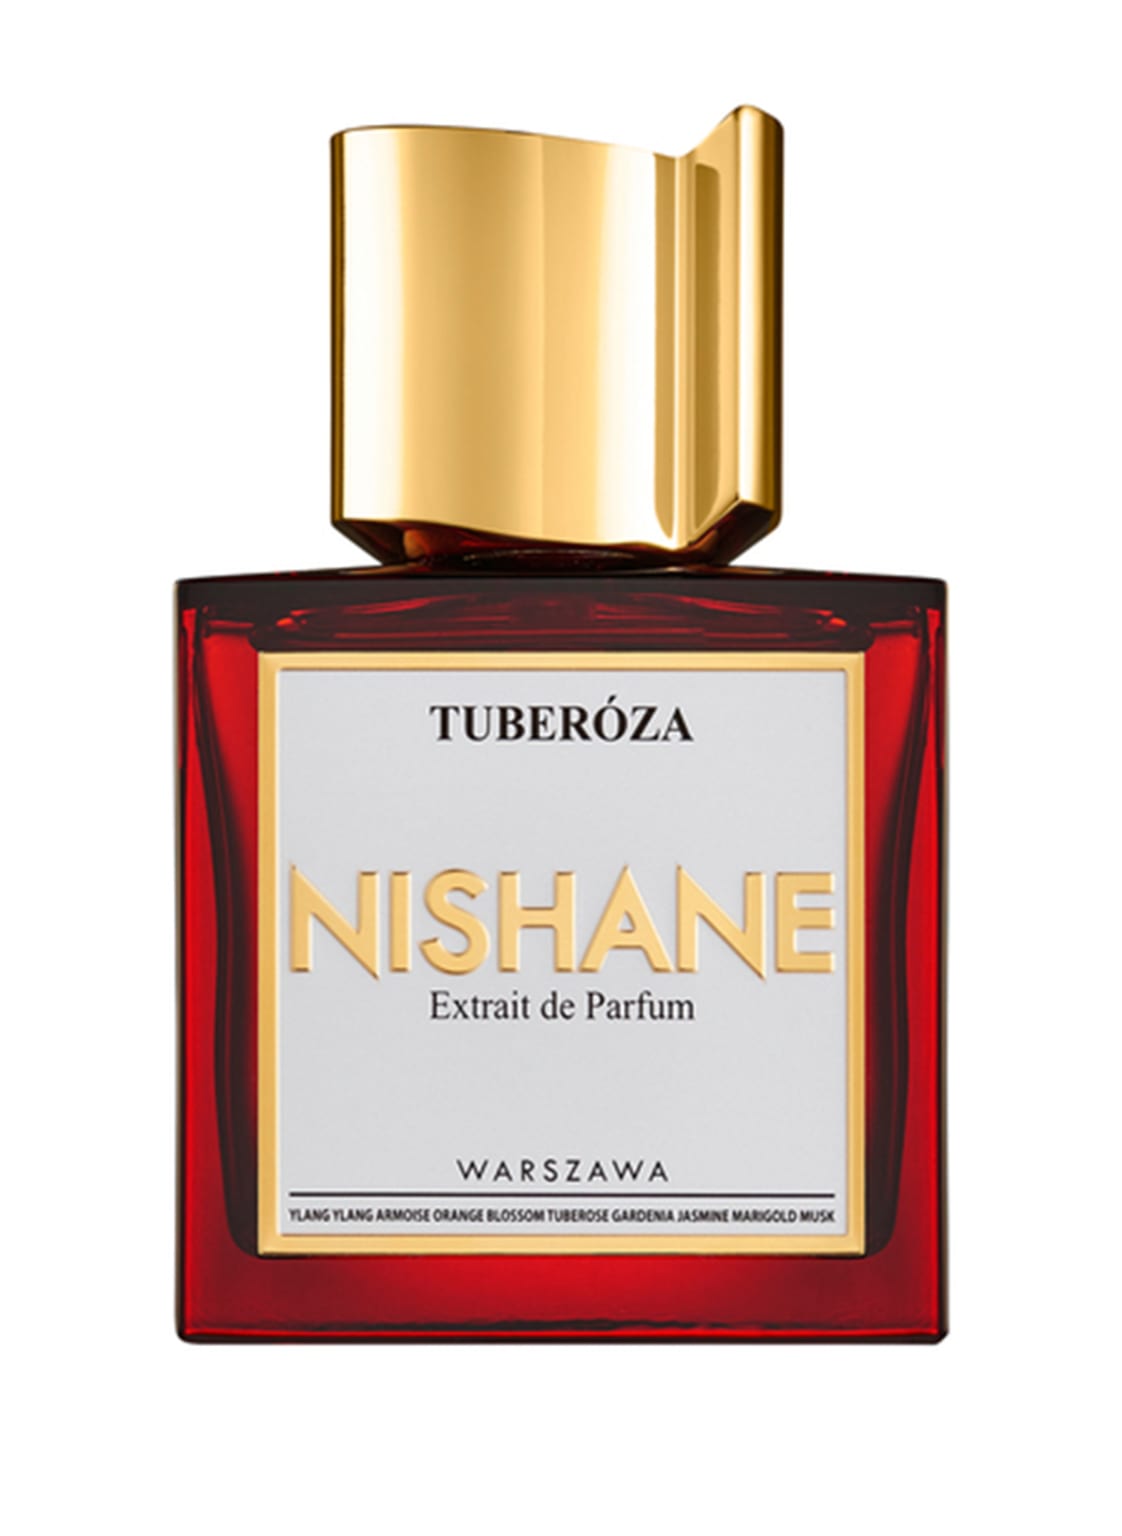 Nishane Tuberóza Extrait de Parfum 50 ml von NISHANE